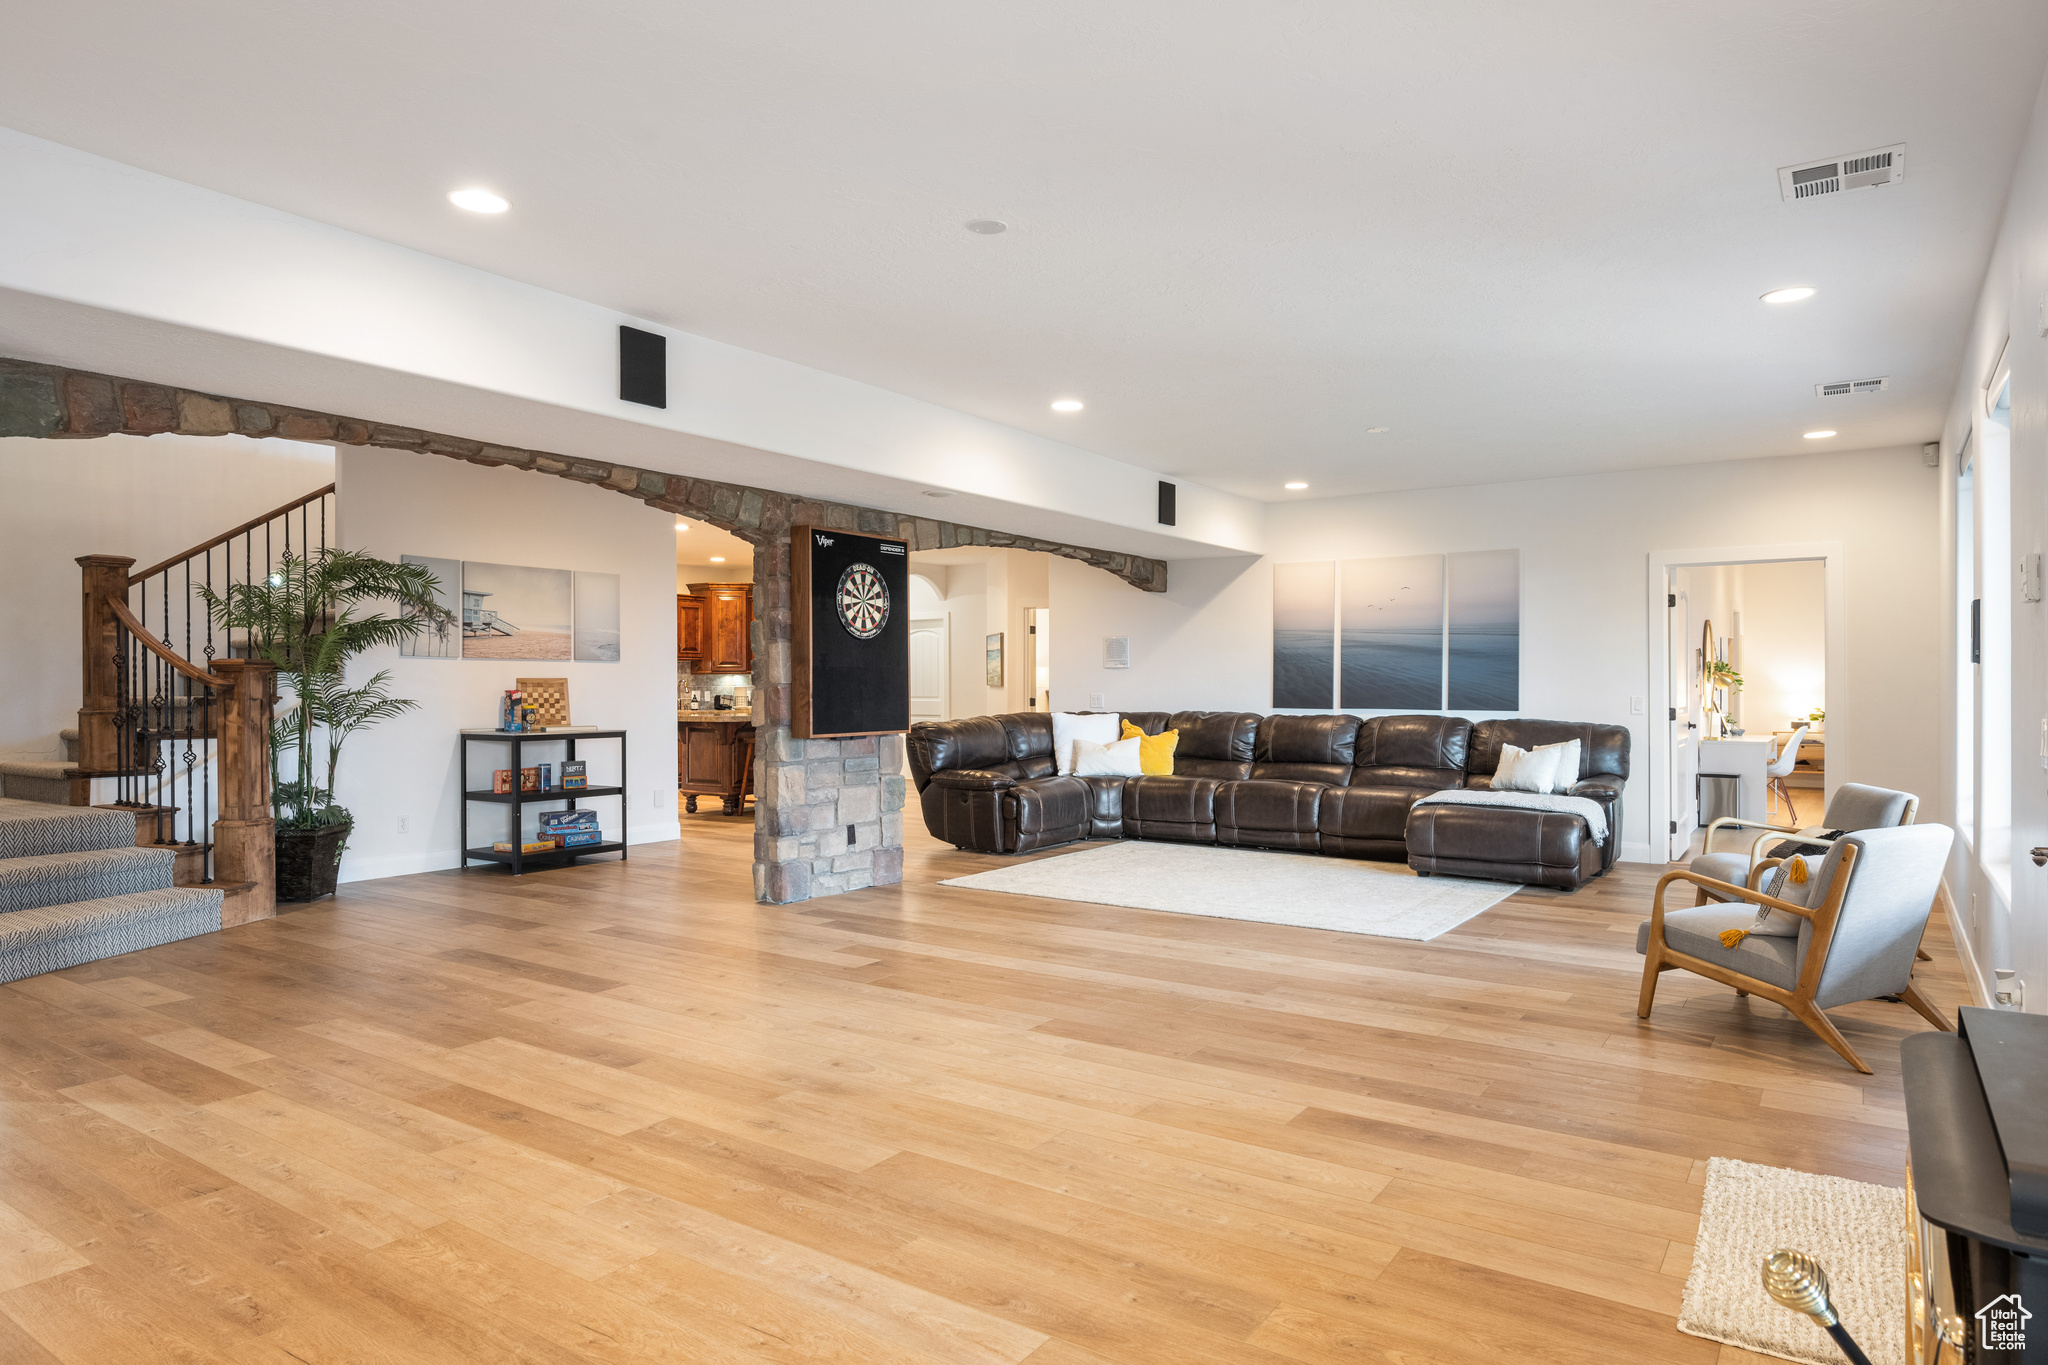 Living room with light wood-type flooring